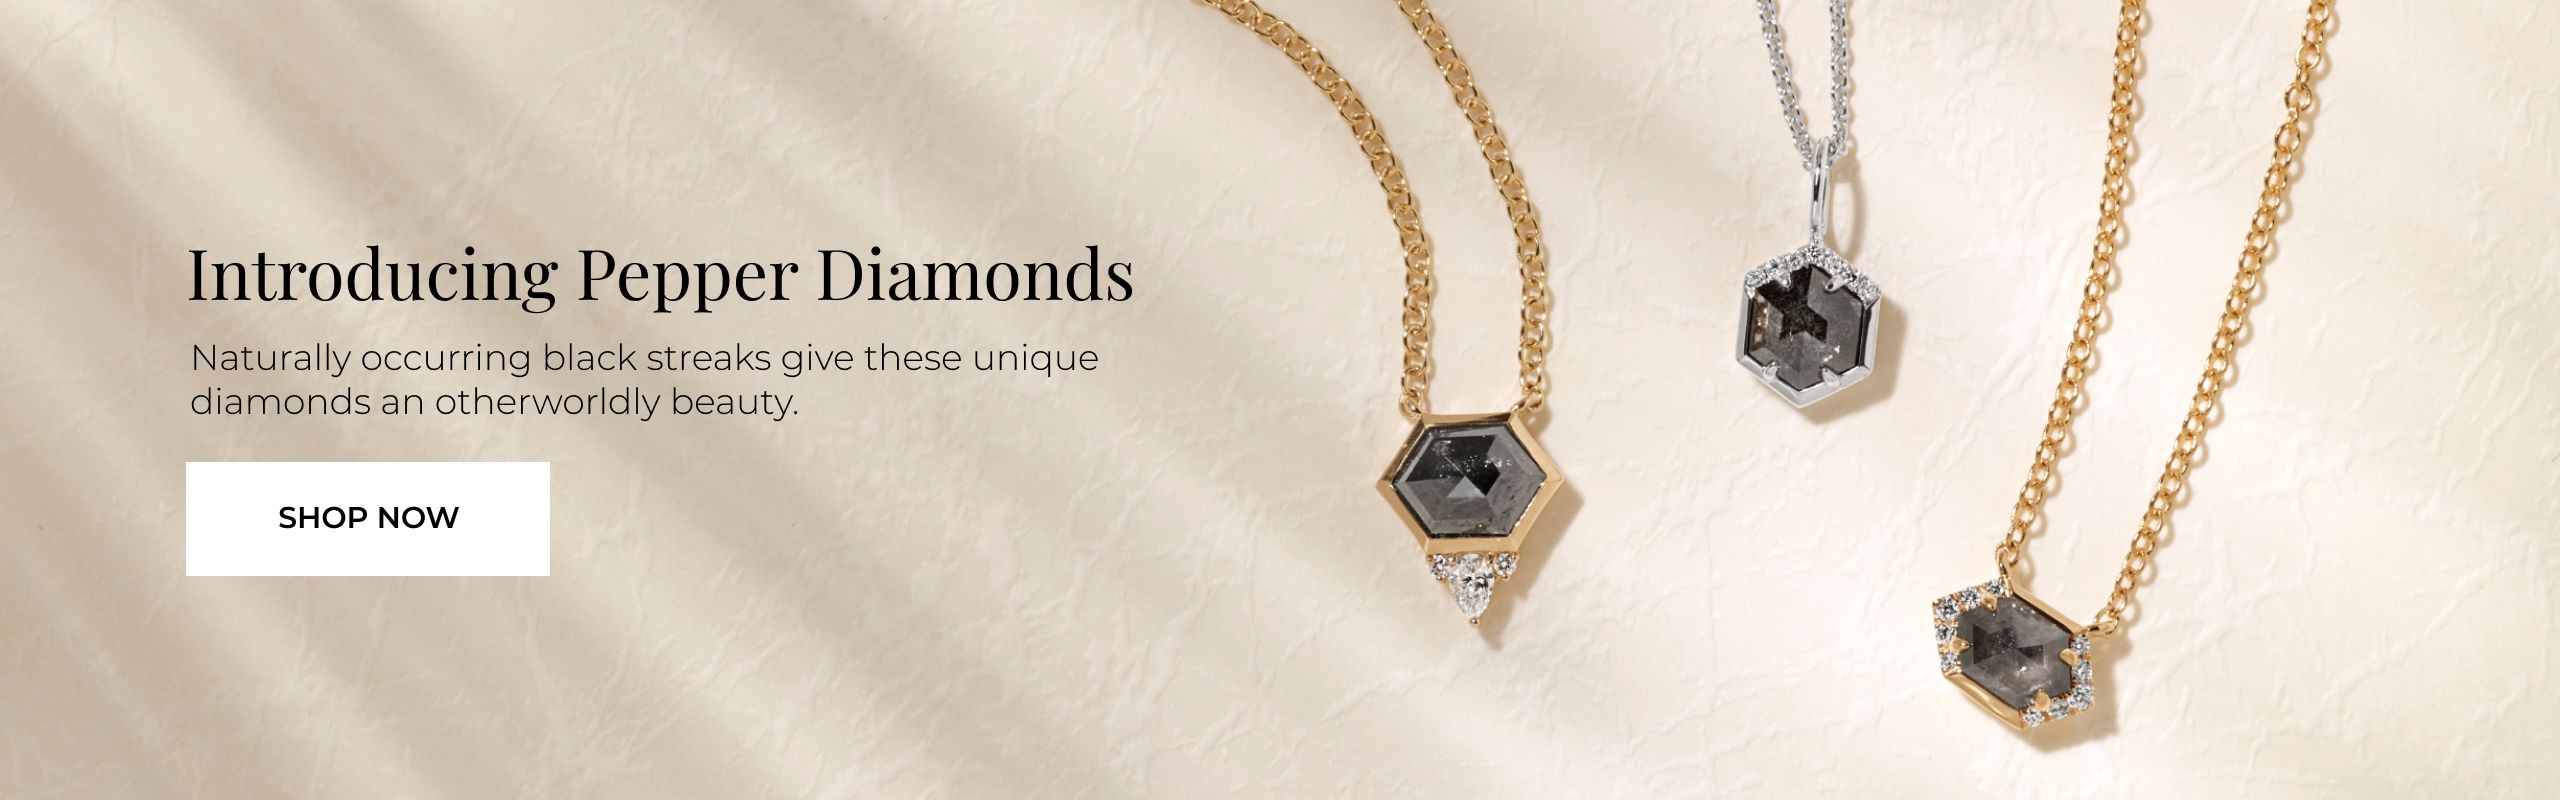 Desktop image of a collection of pepper diamond pendants